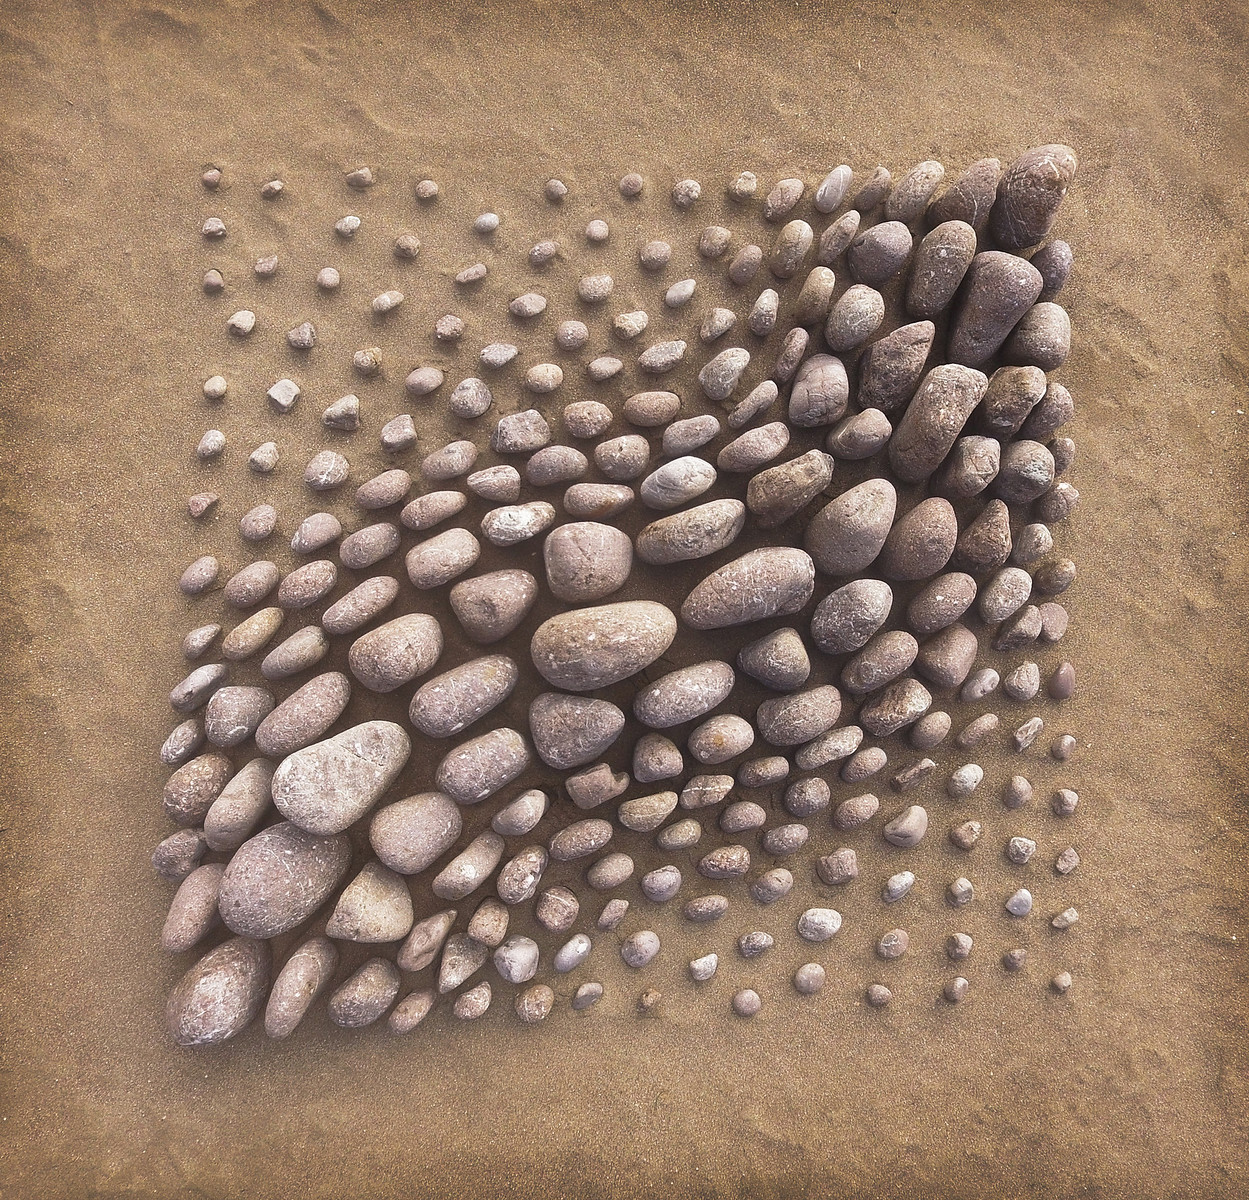 Stunning Beach Stone Art by Jon Foreman